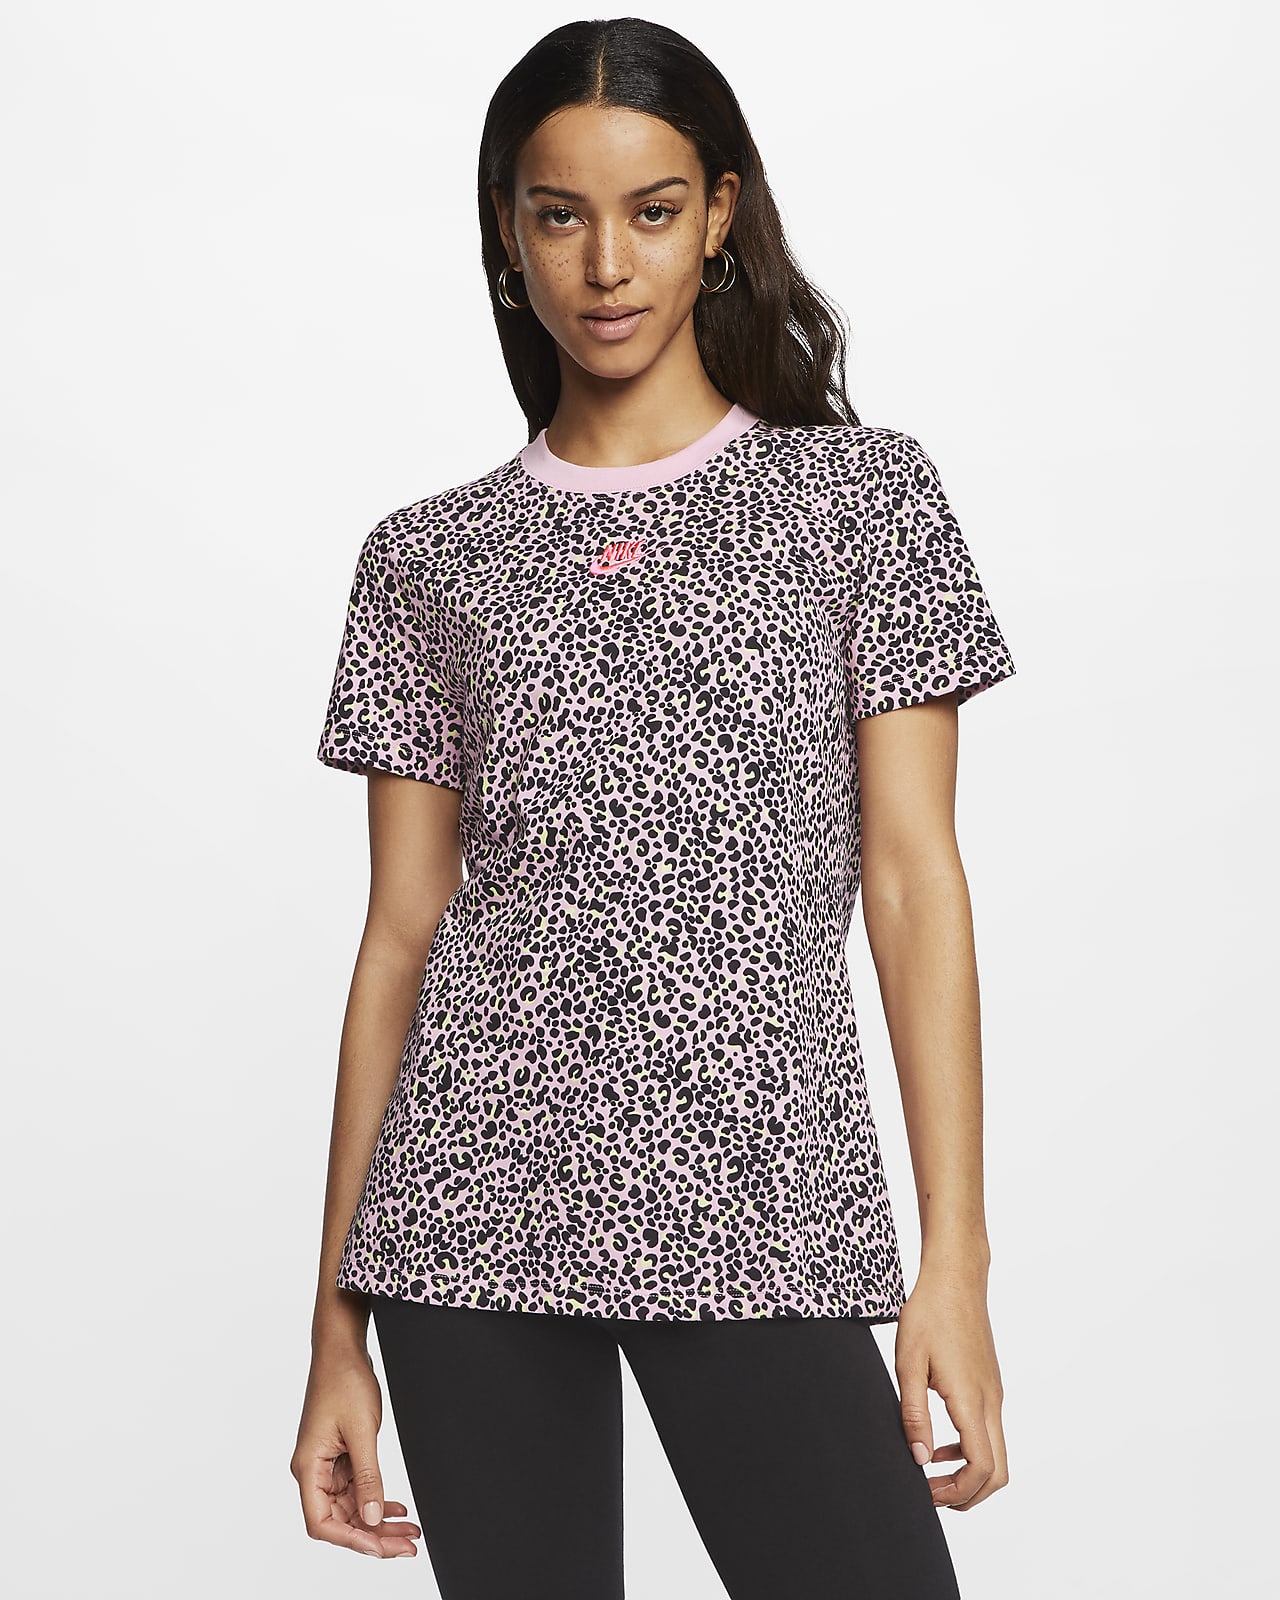 cheetah print nike shirt